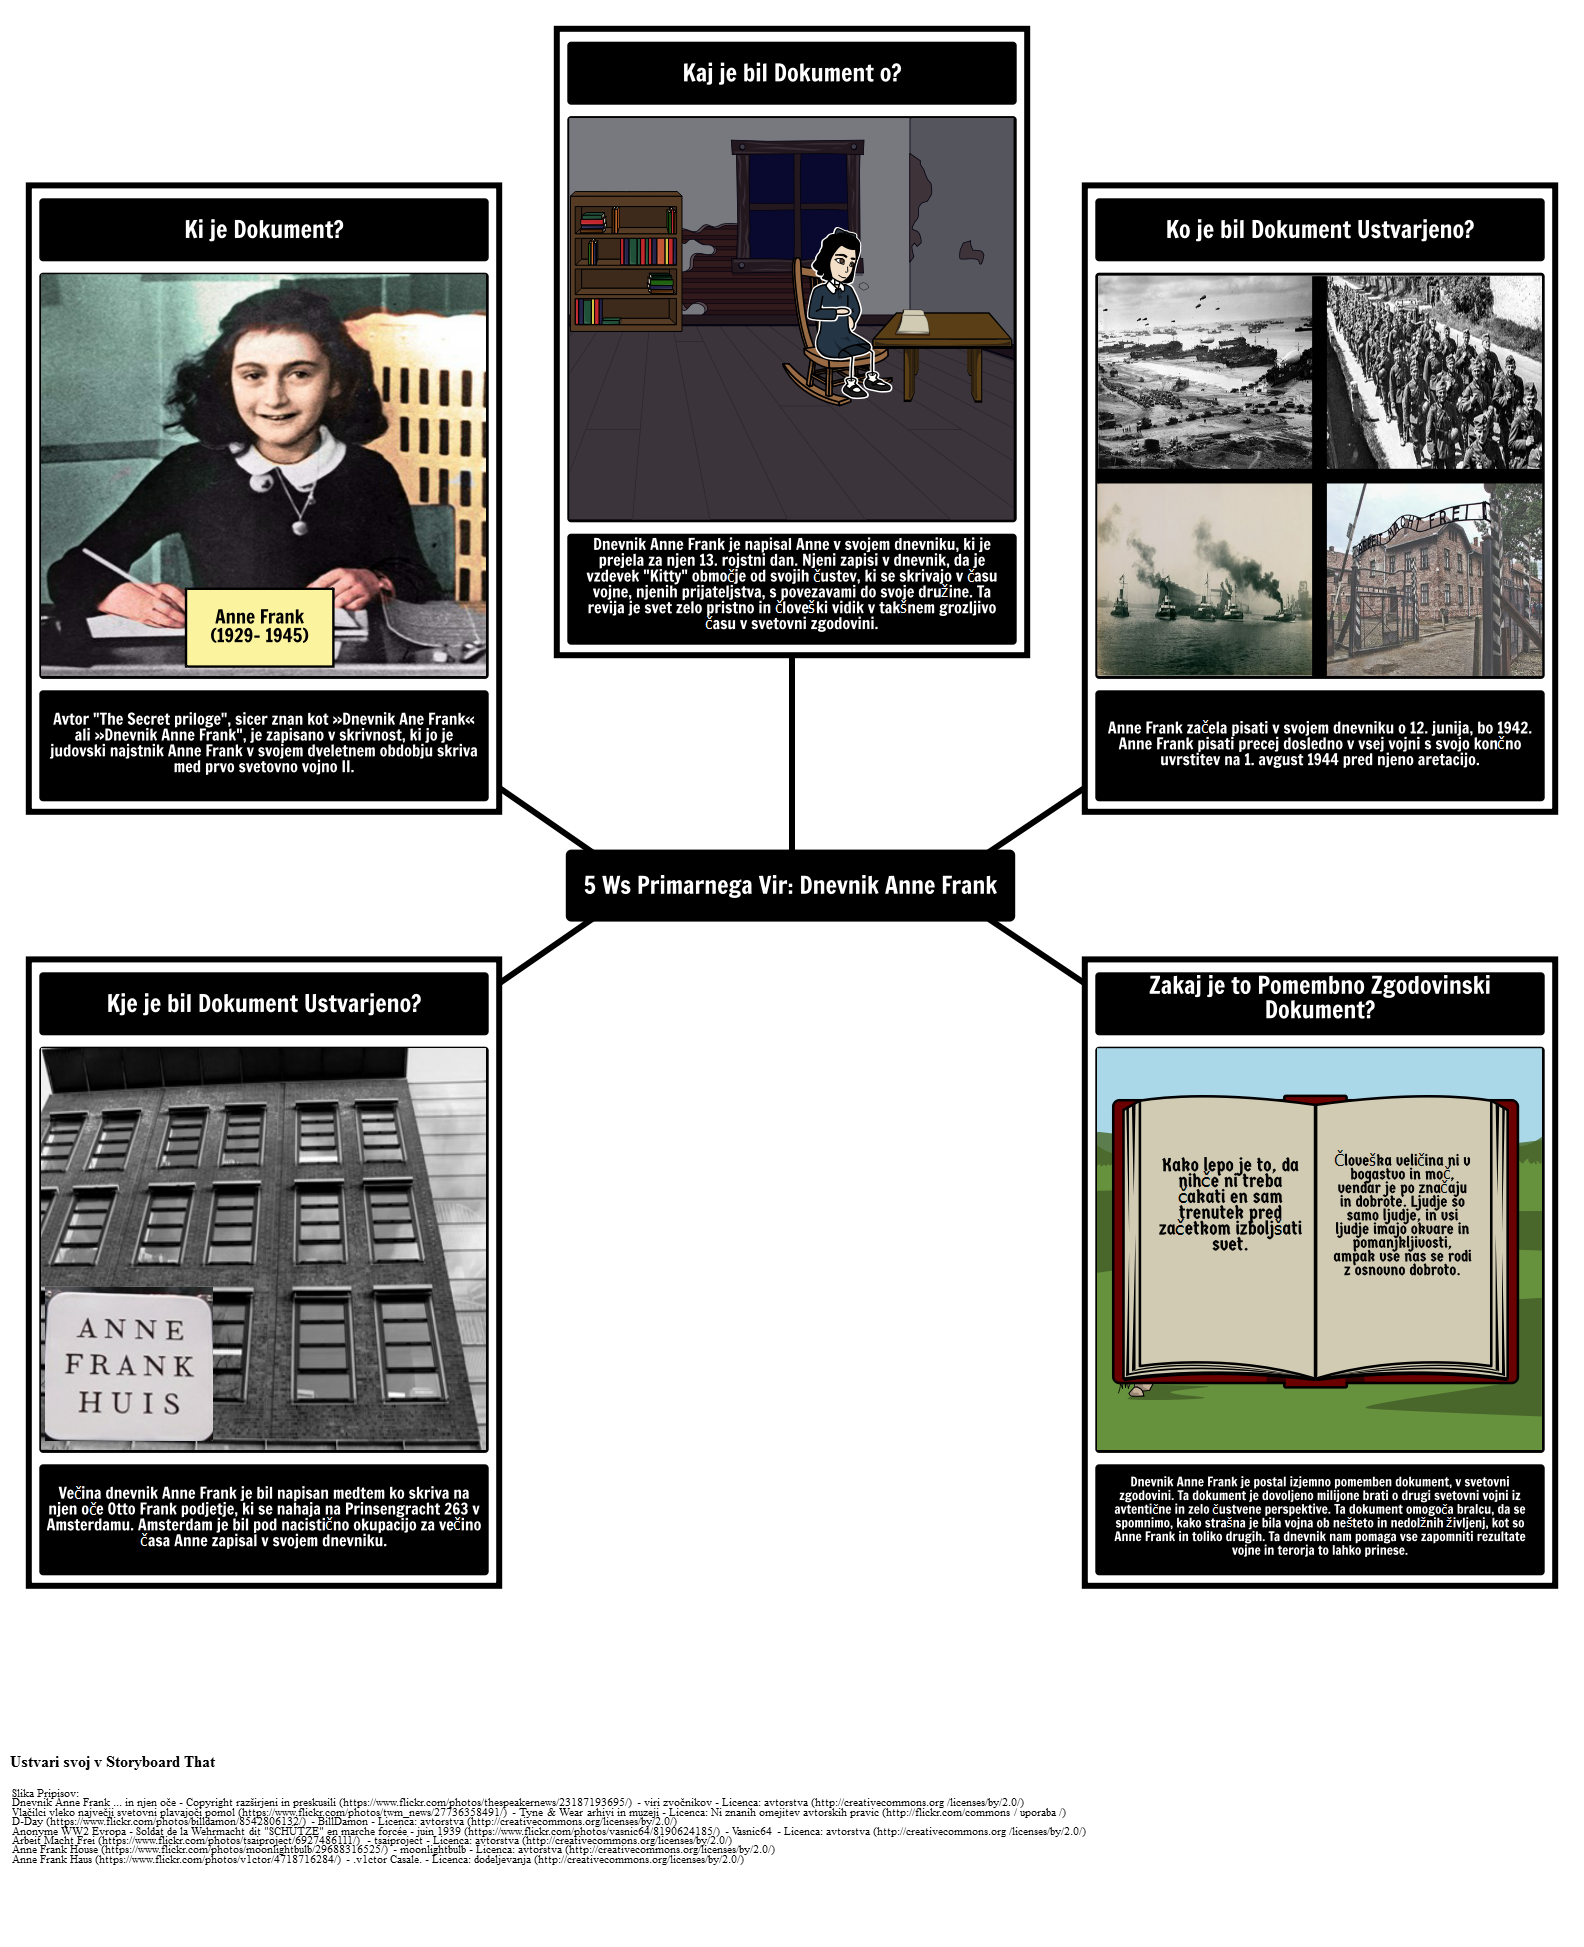 Primarni vir 5Ws: Dnevnik Anne Frank